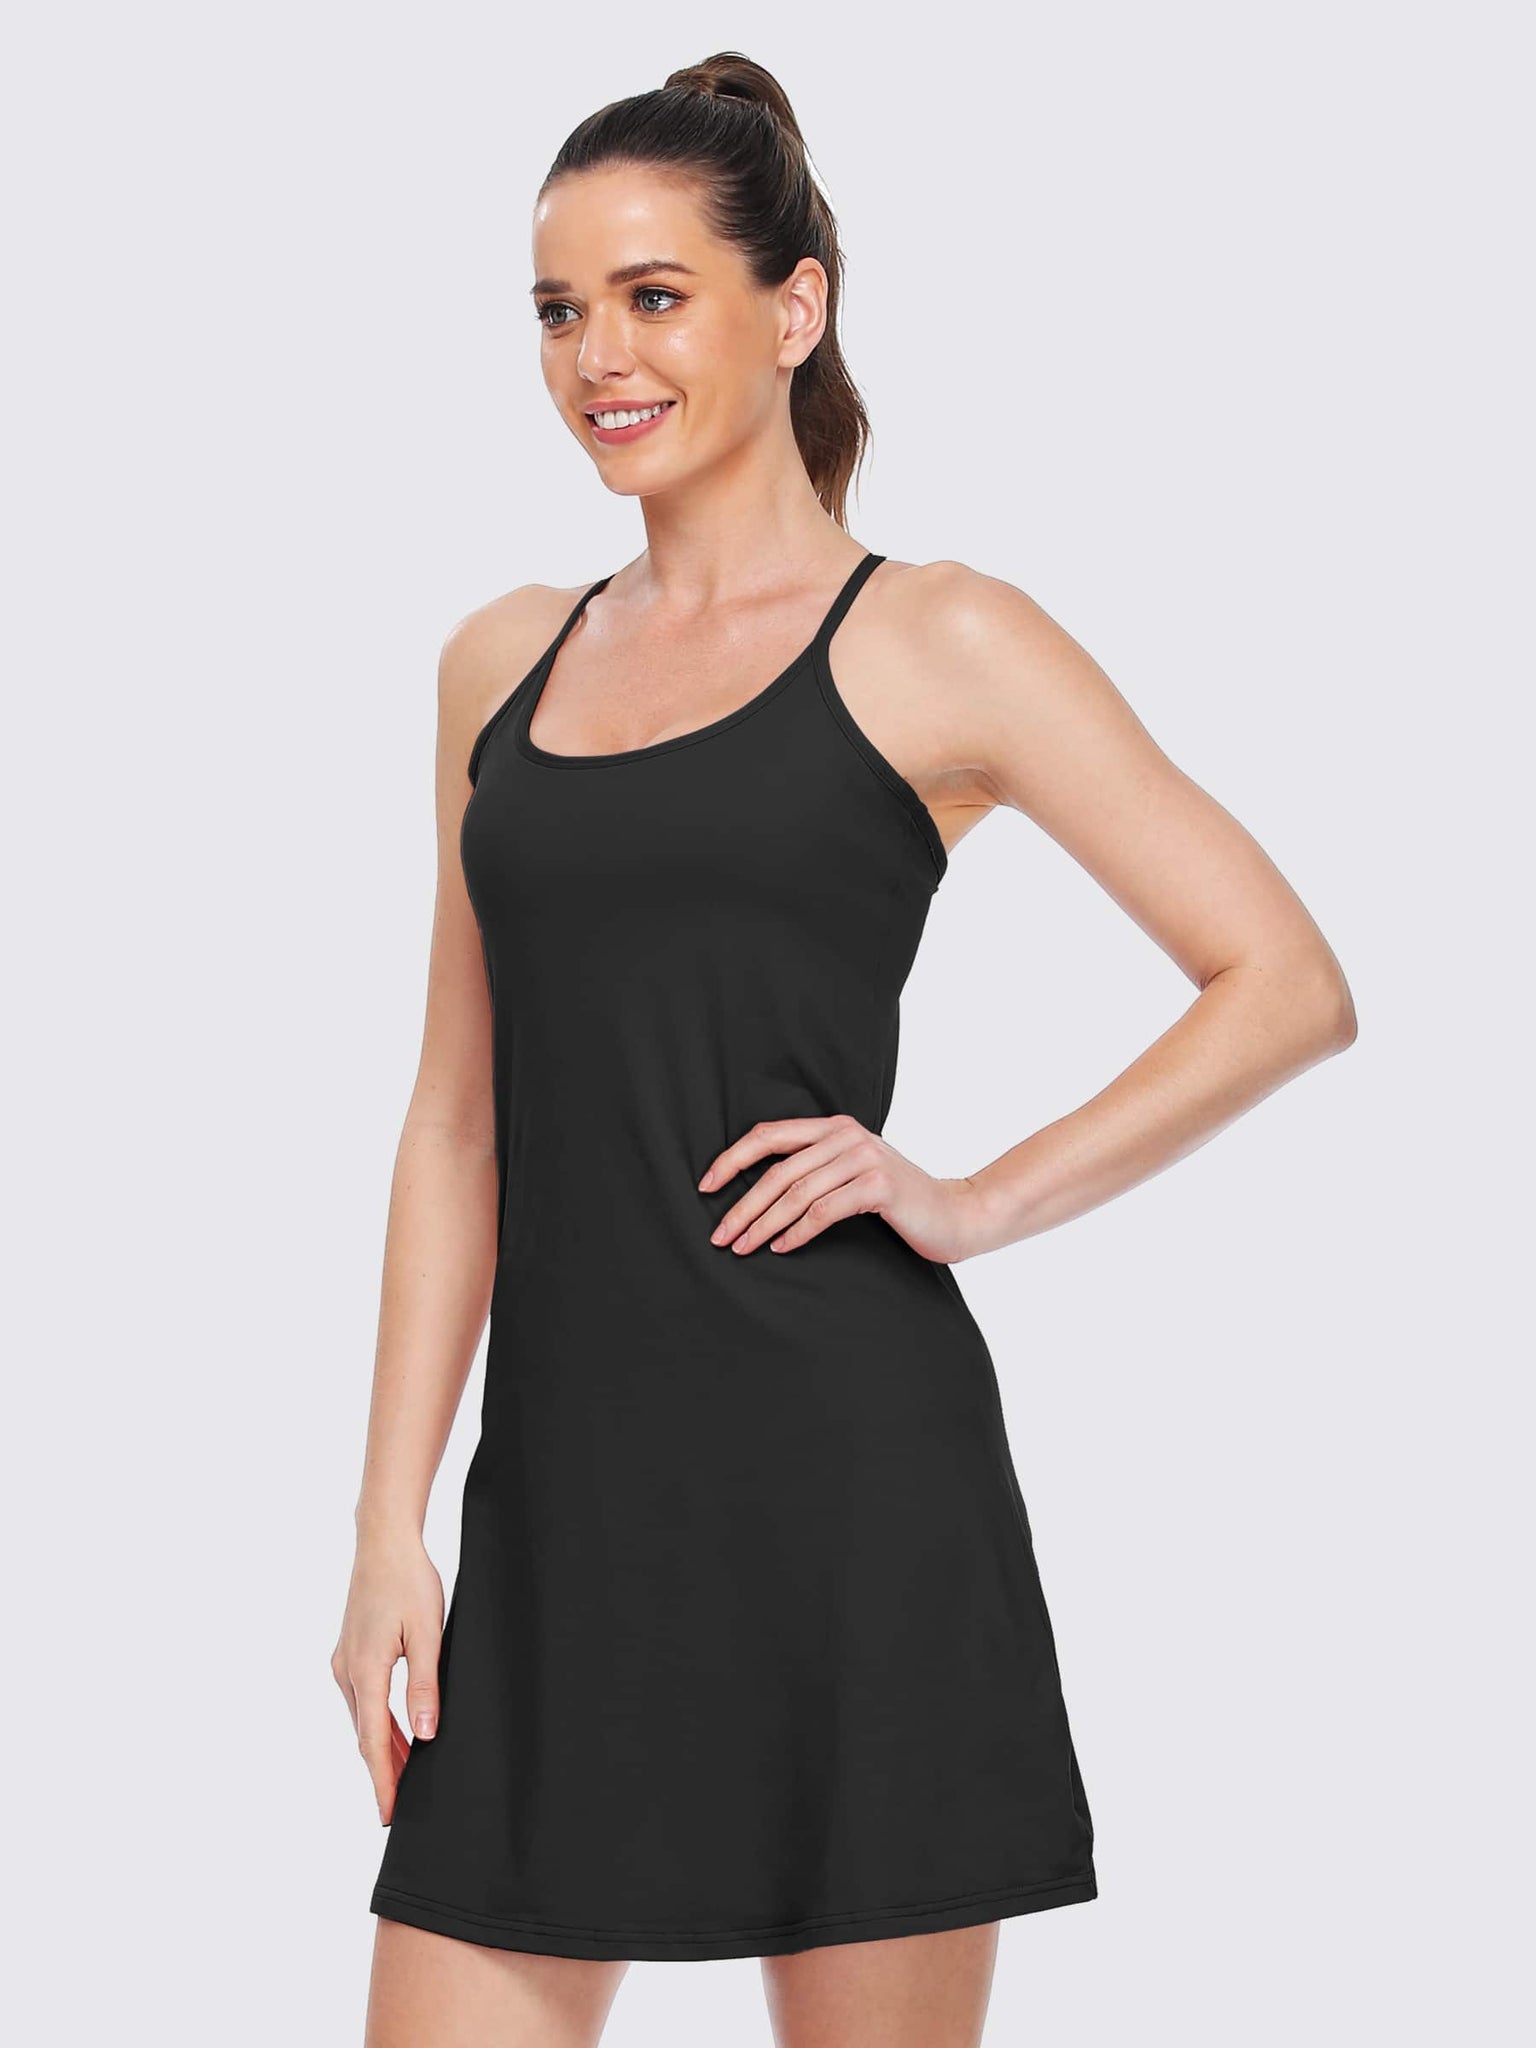 Women's Exercise Dress with Detachable Shorts_black_model4